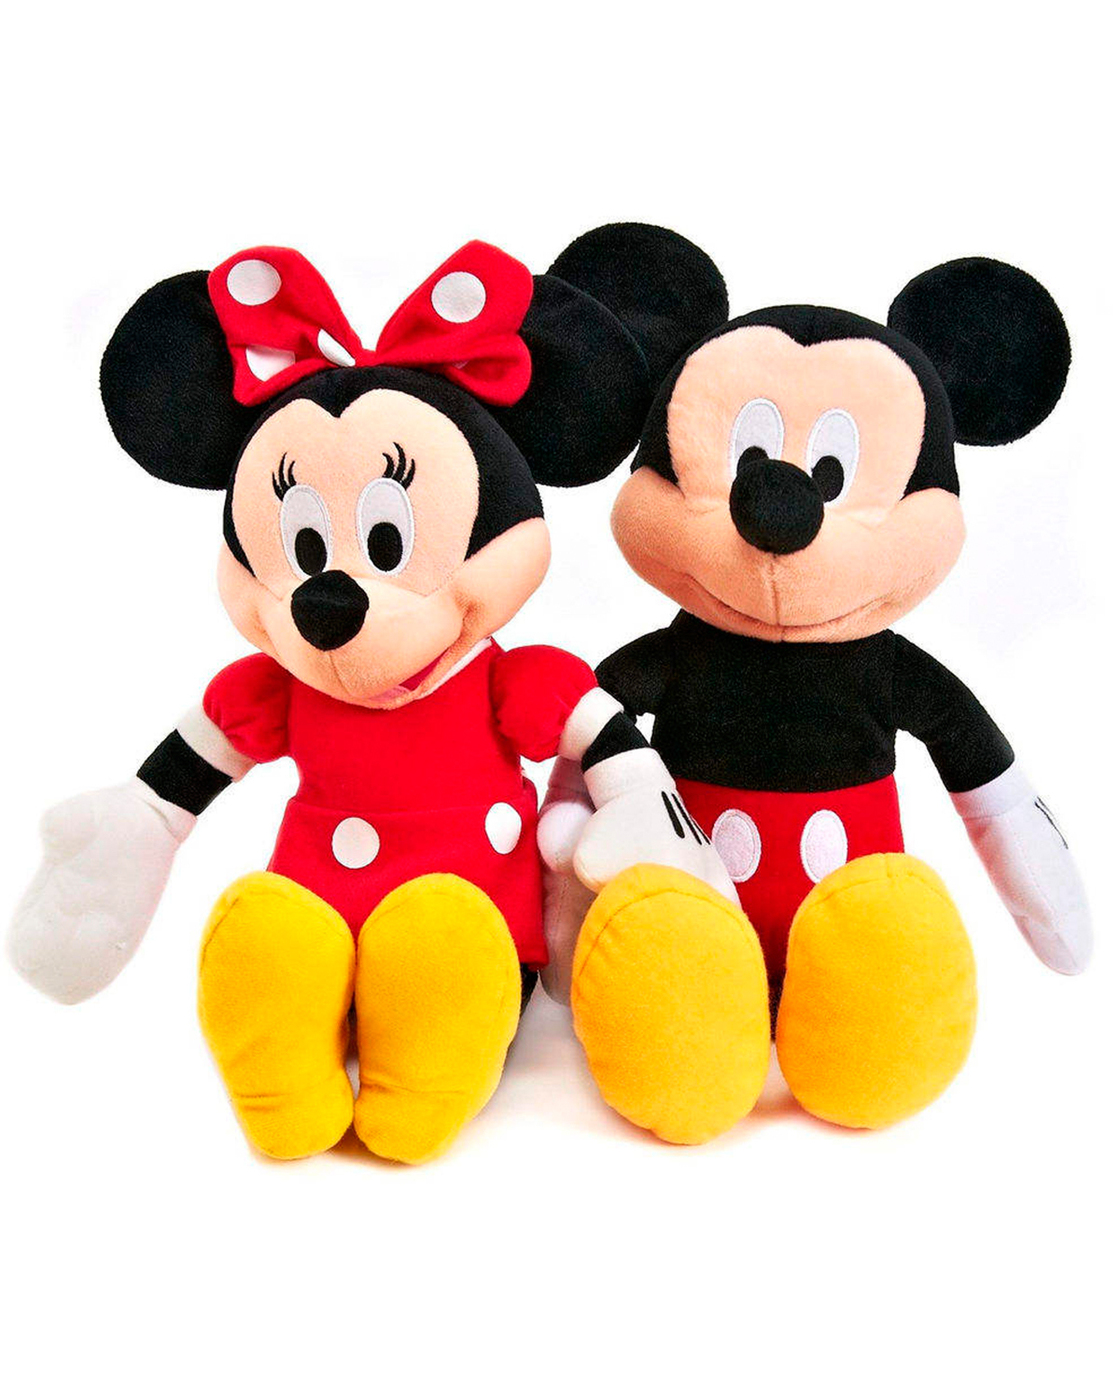 Мягкие игрушки Микки и Минни Маус Mickey Minnie Mouse, 2 шт. 35 см мягкая игрушка la laland микки маус 50 см